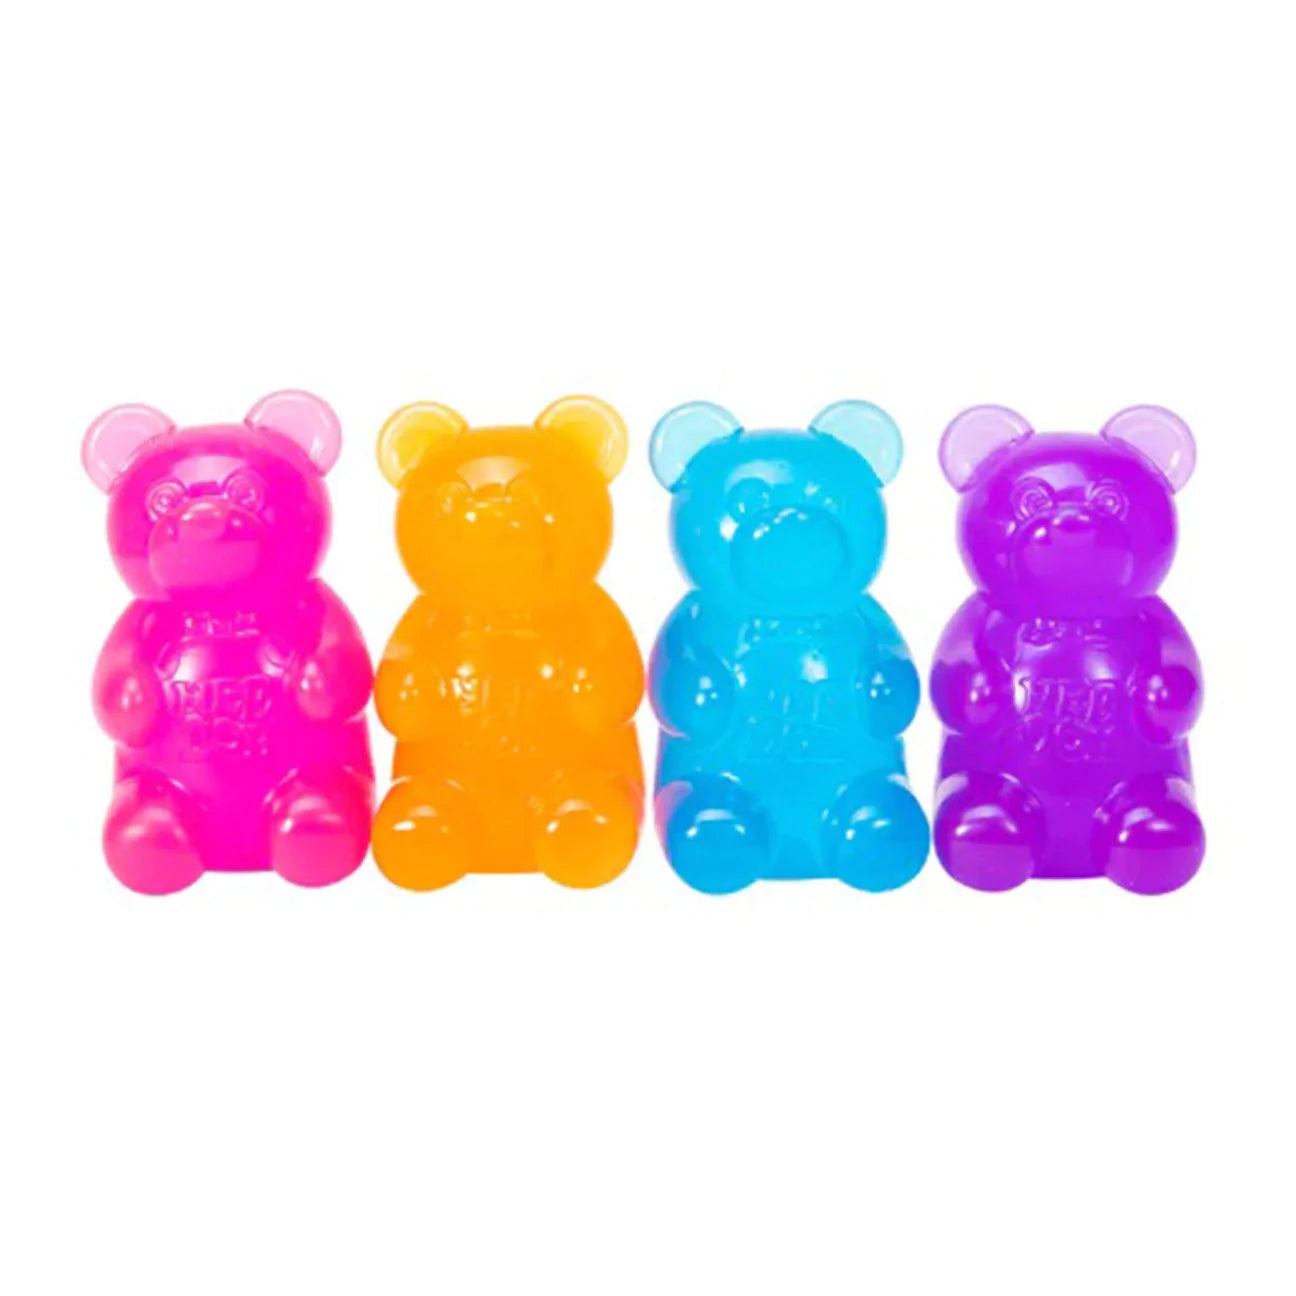 Schylling Gummy Bear NeeDoh